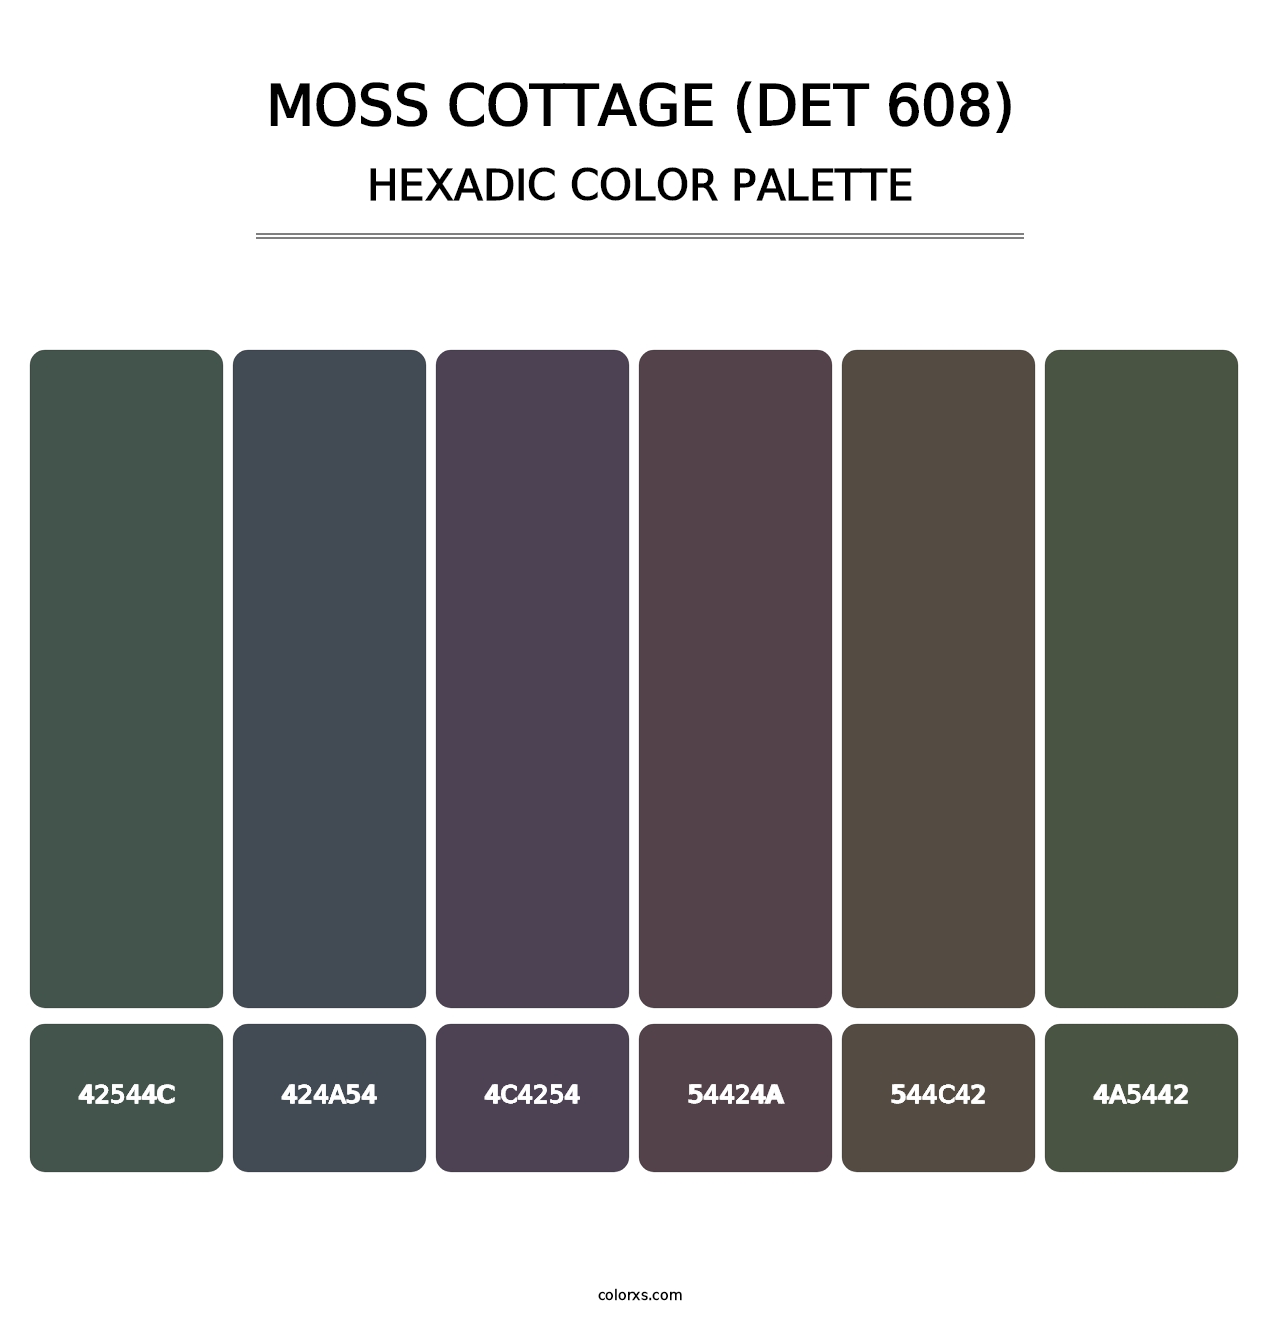 Moss Cottage (DET 608) - Hexadic Color Palette